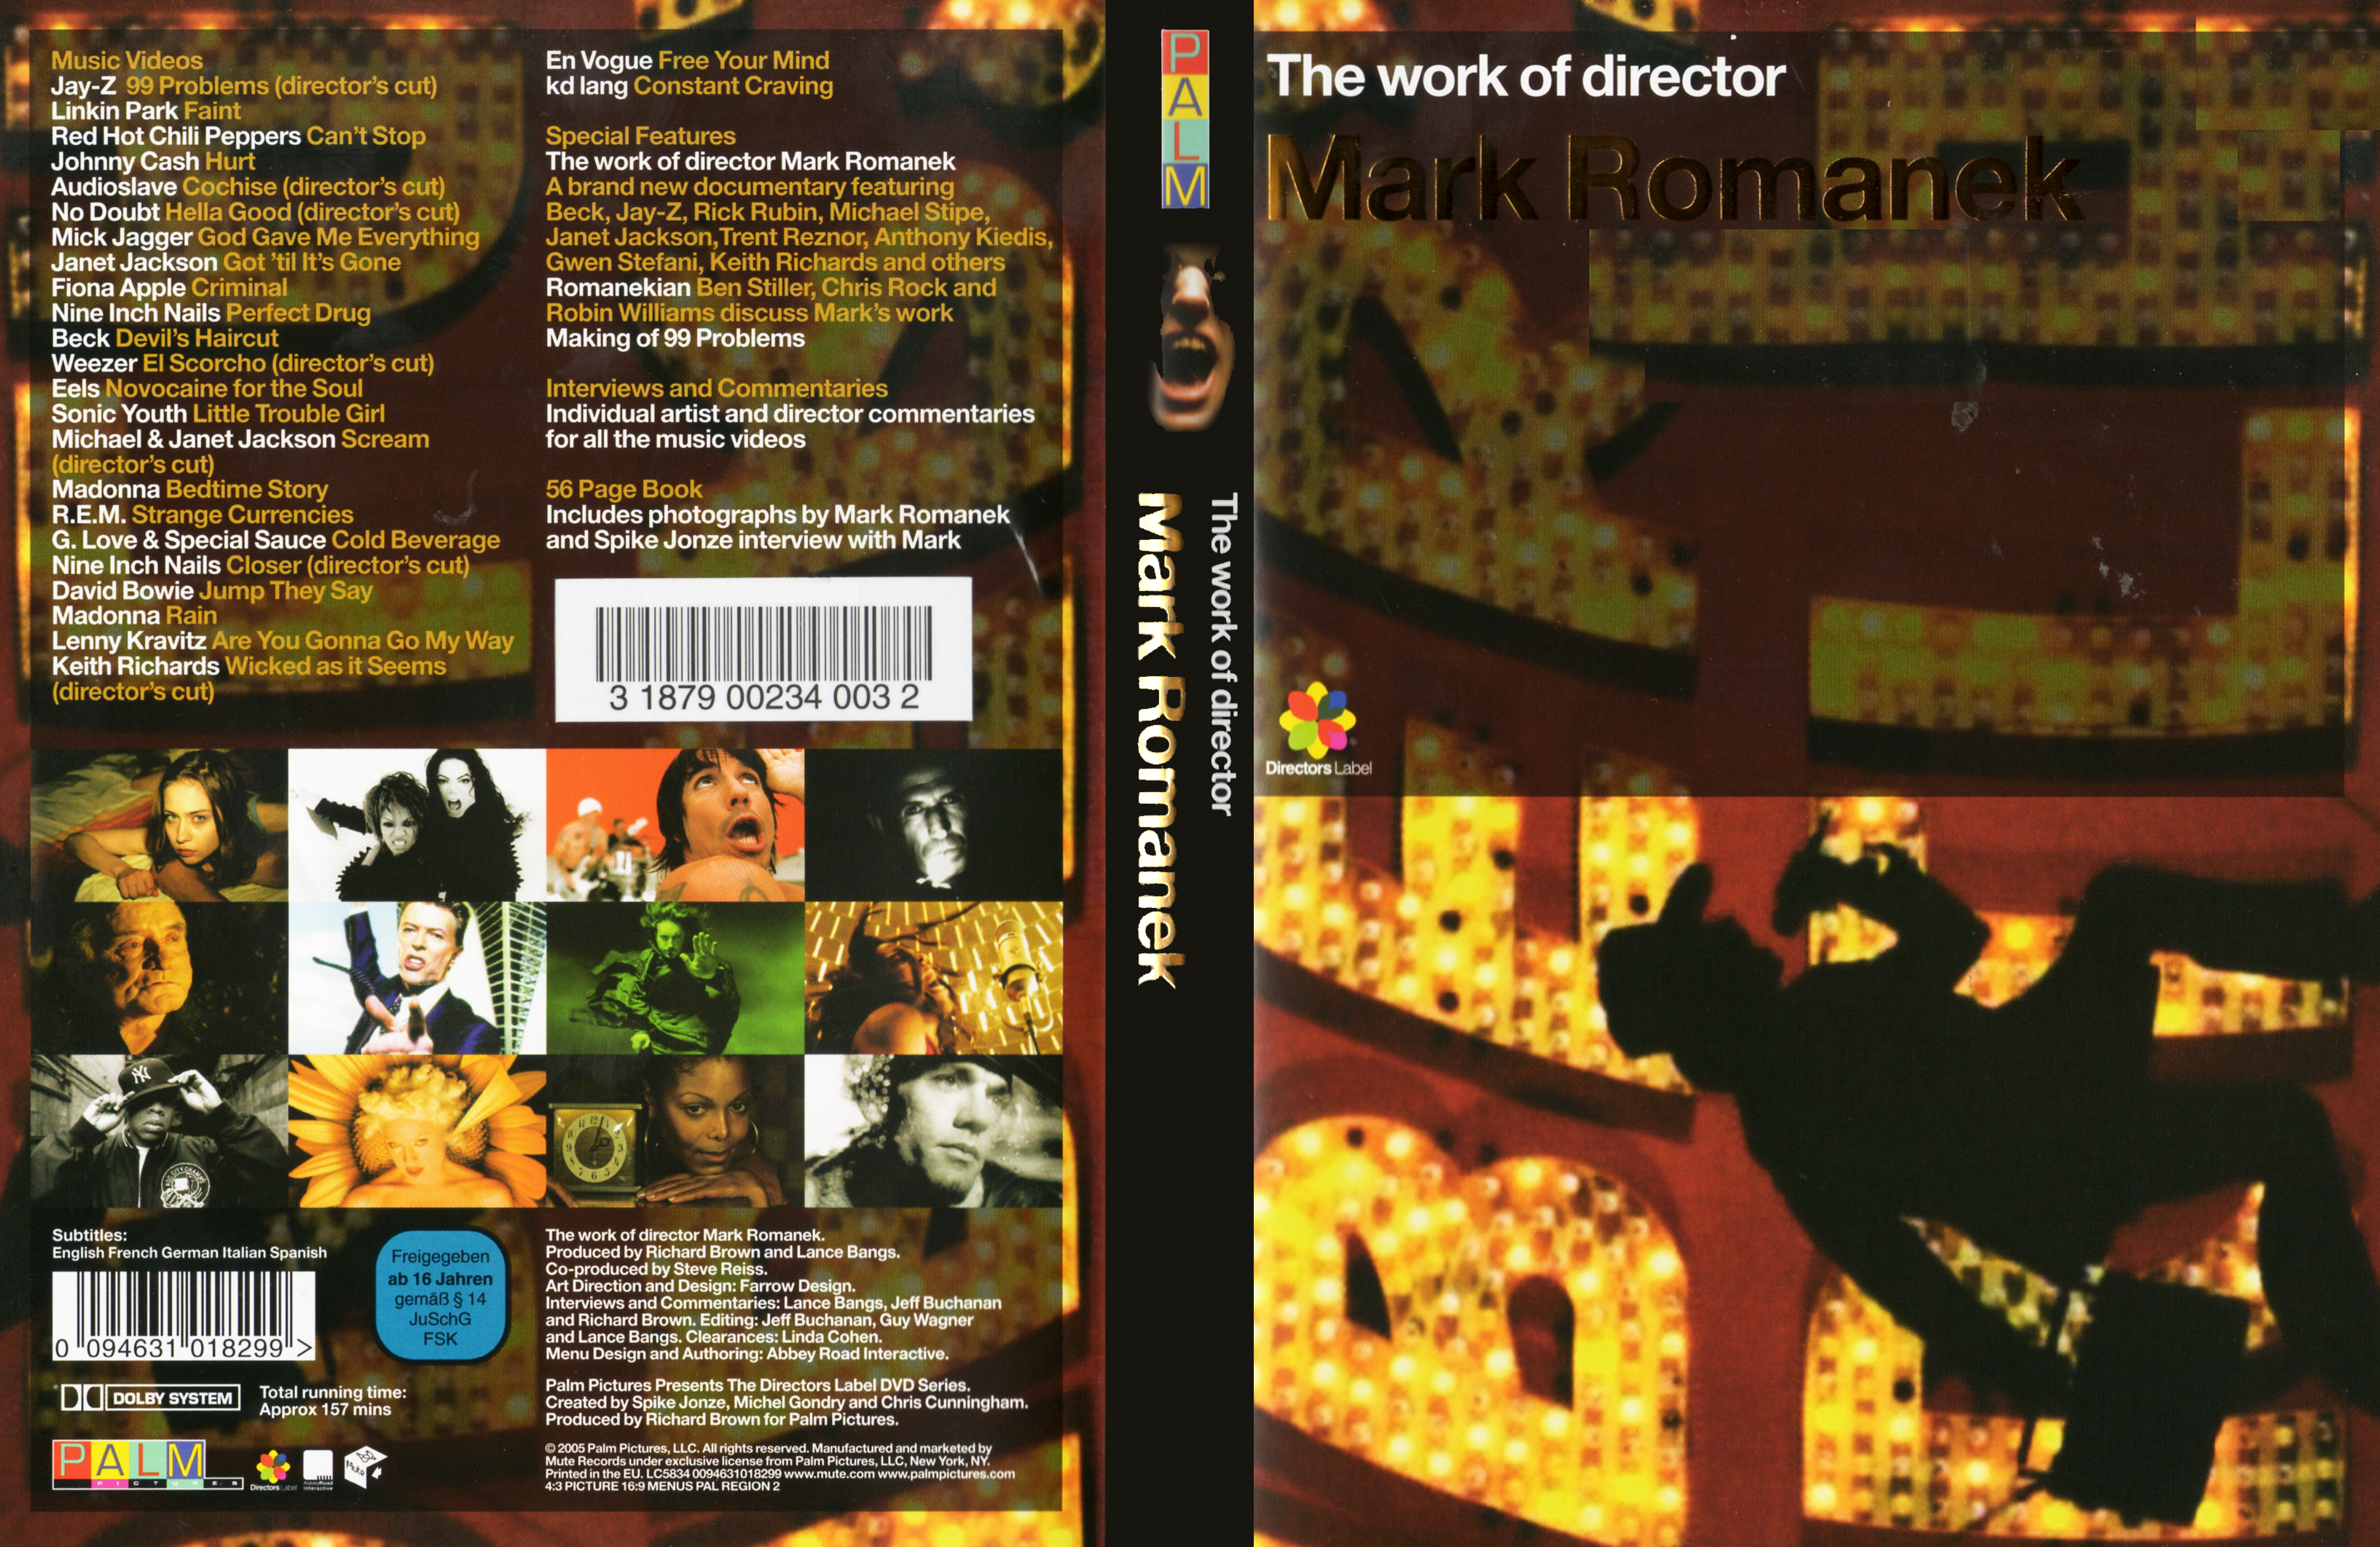 Jaquette DVD The work of director - Mark Romanek